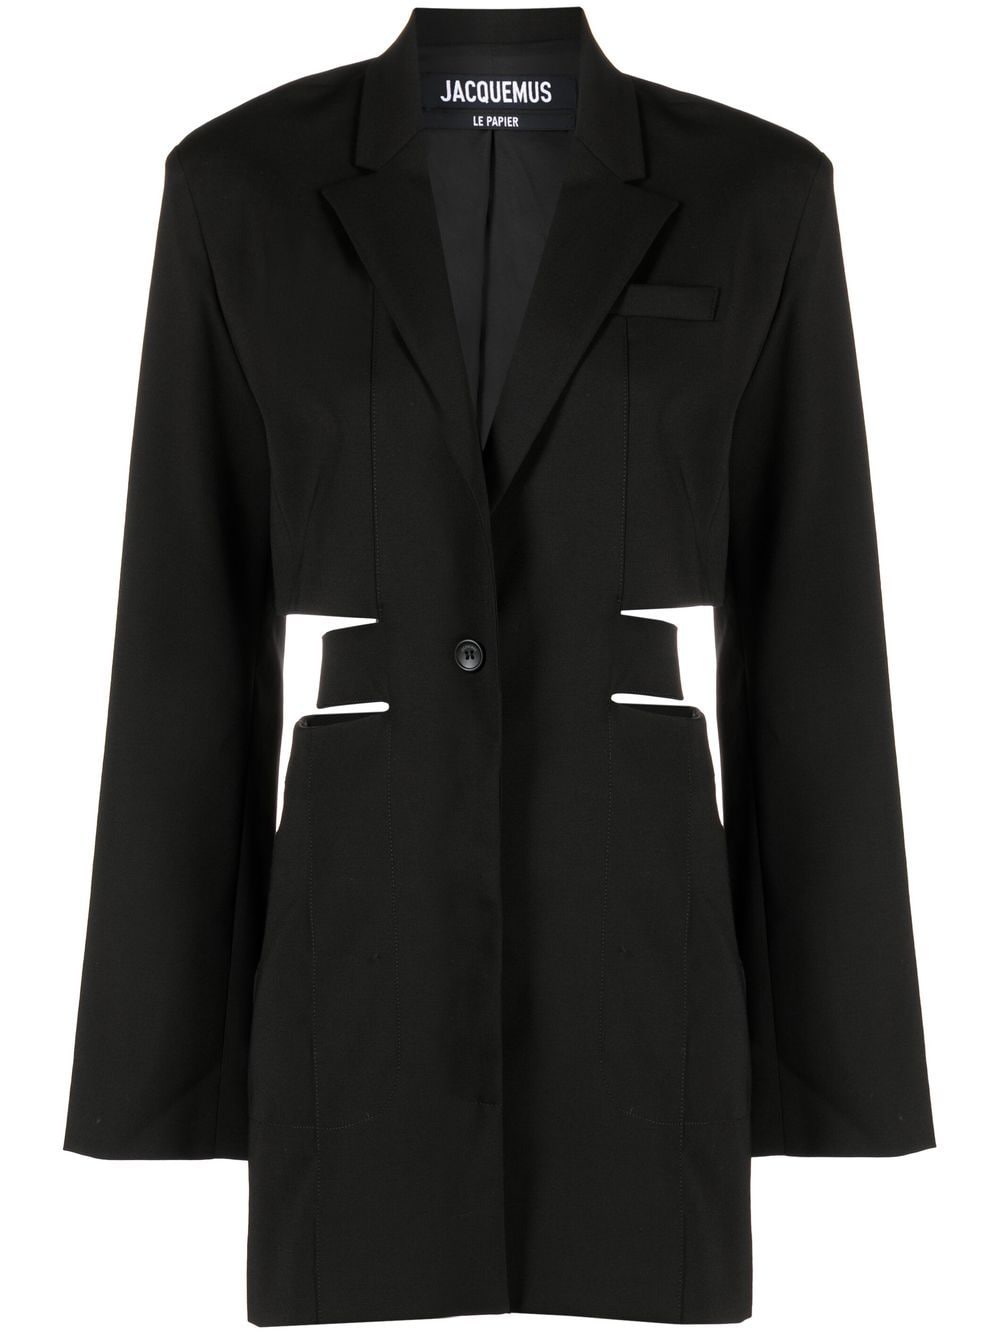 Jacquemus Bari cut-out blazer dress - Black von Jacquemus